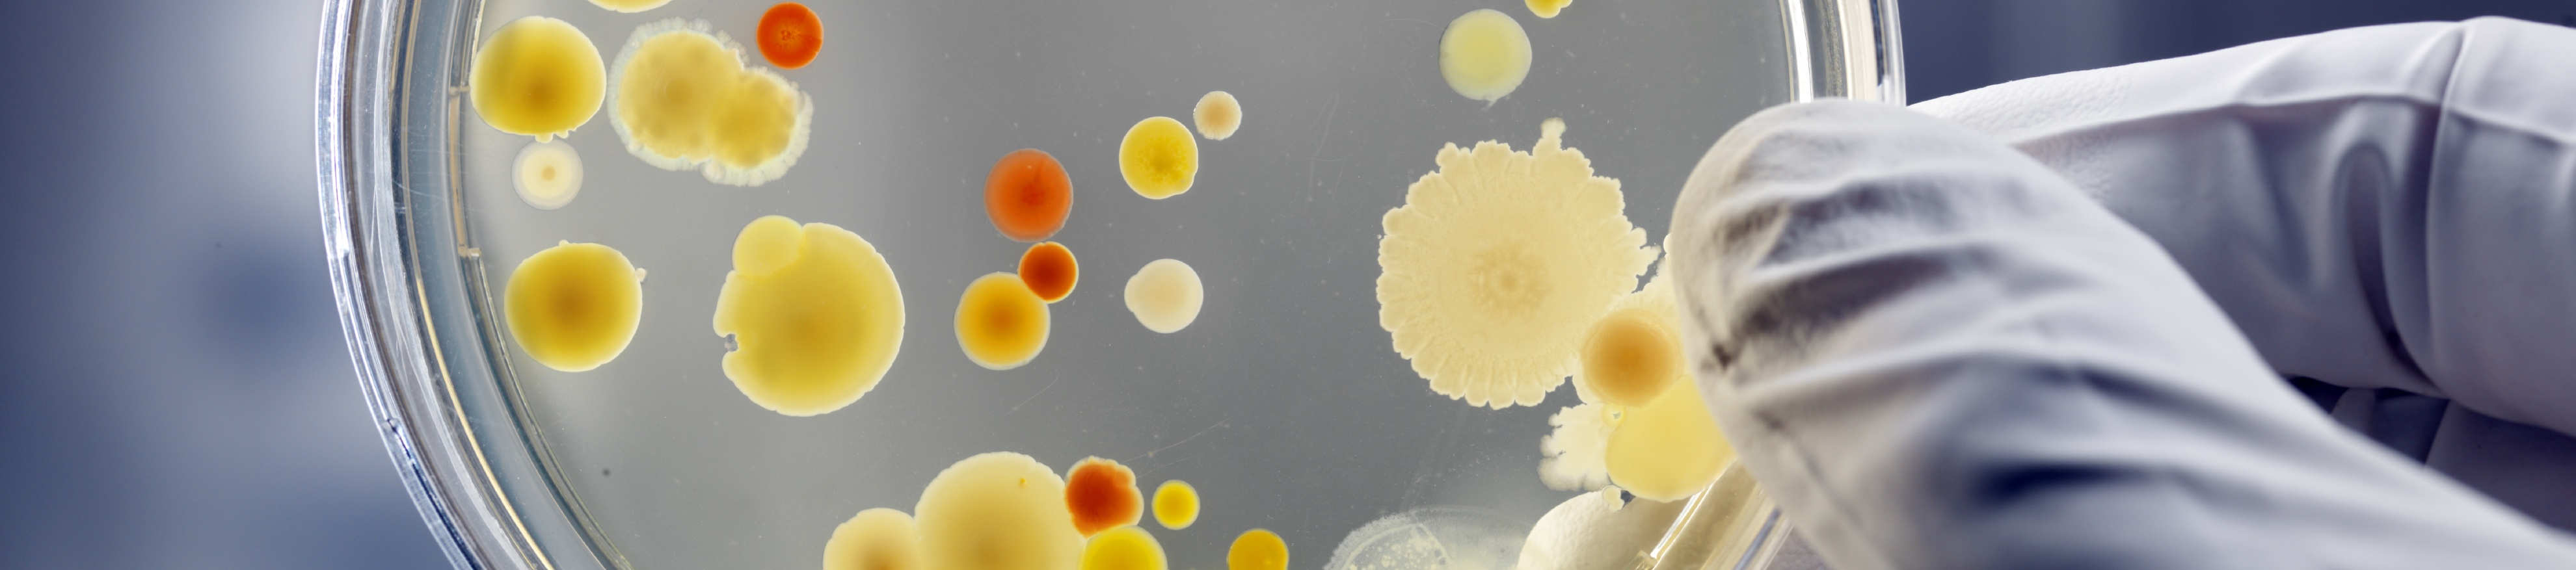 cells in a petri dish